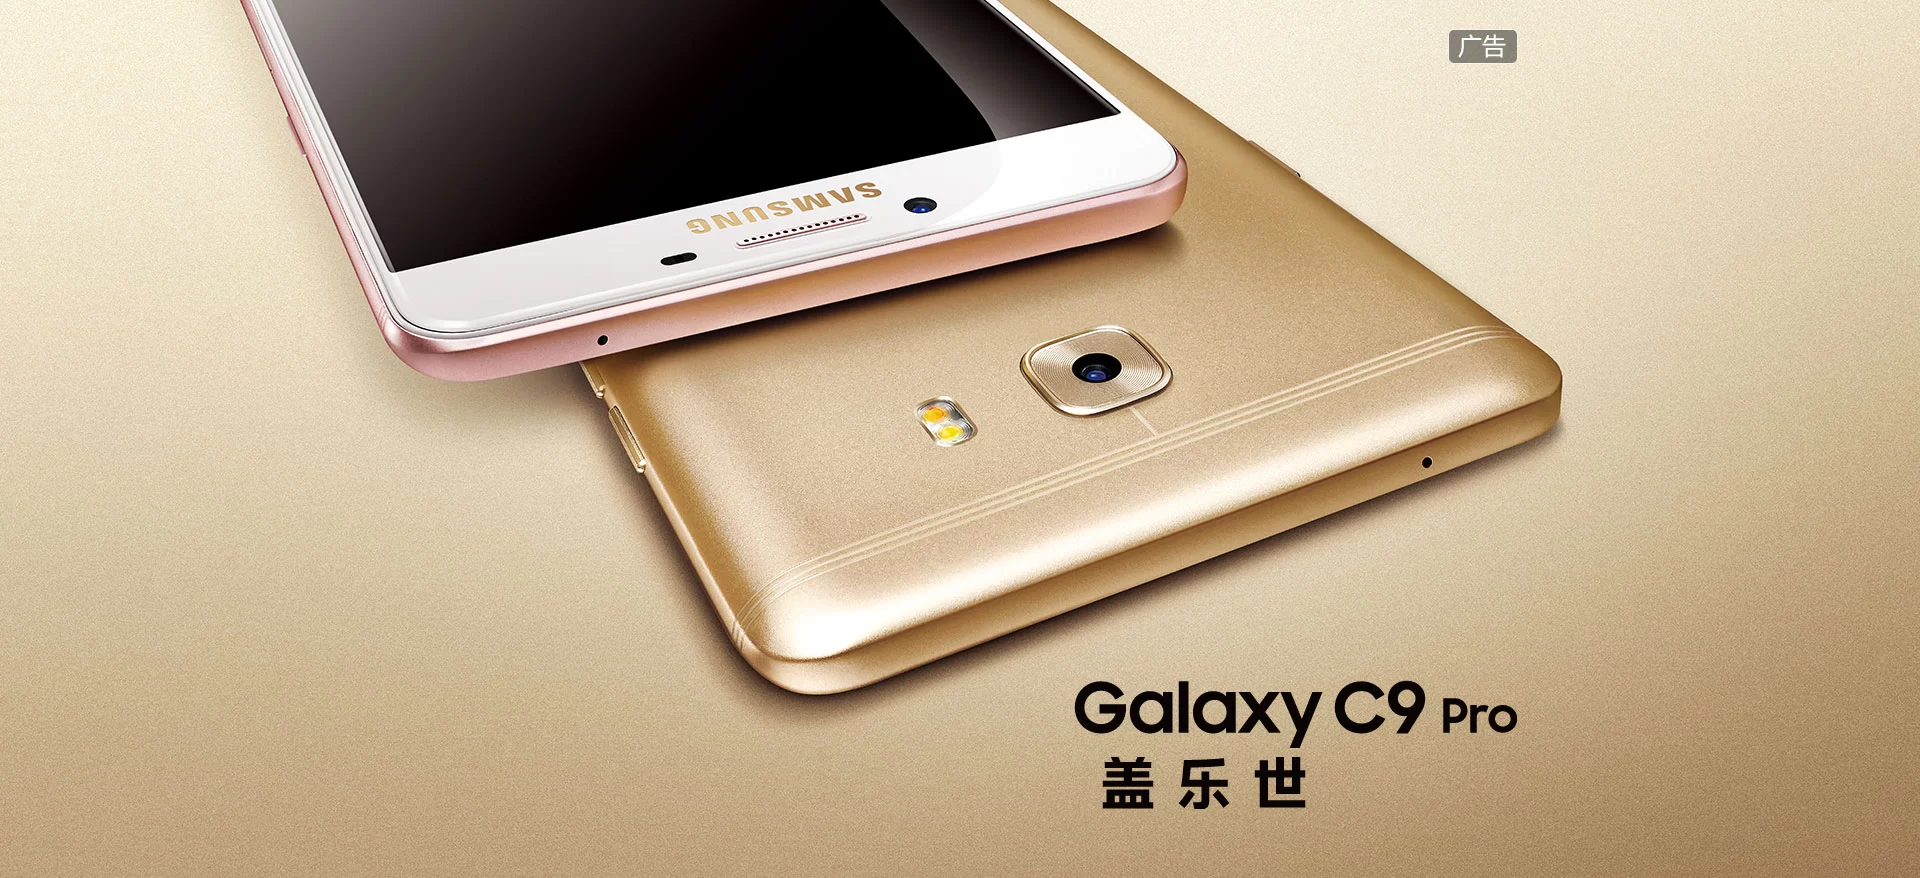 kv | china | Samsung เปิดตัว Galaxy C9 Pro เล็งทำตลาดในจีนด้วยสมาร์ทโฟนรุ่นแรกของบริษัทที่มี RAM 6GB